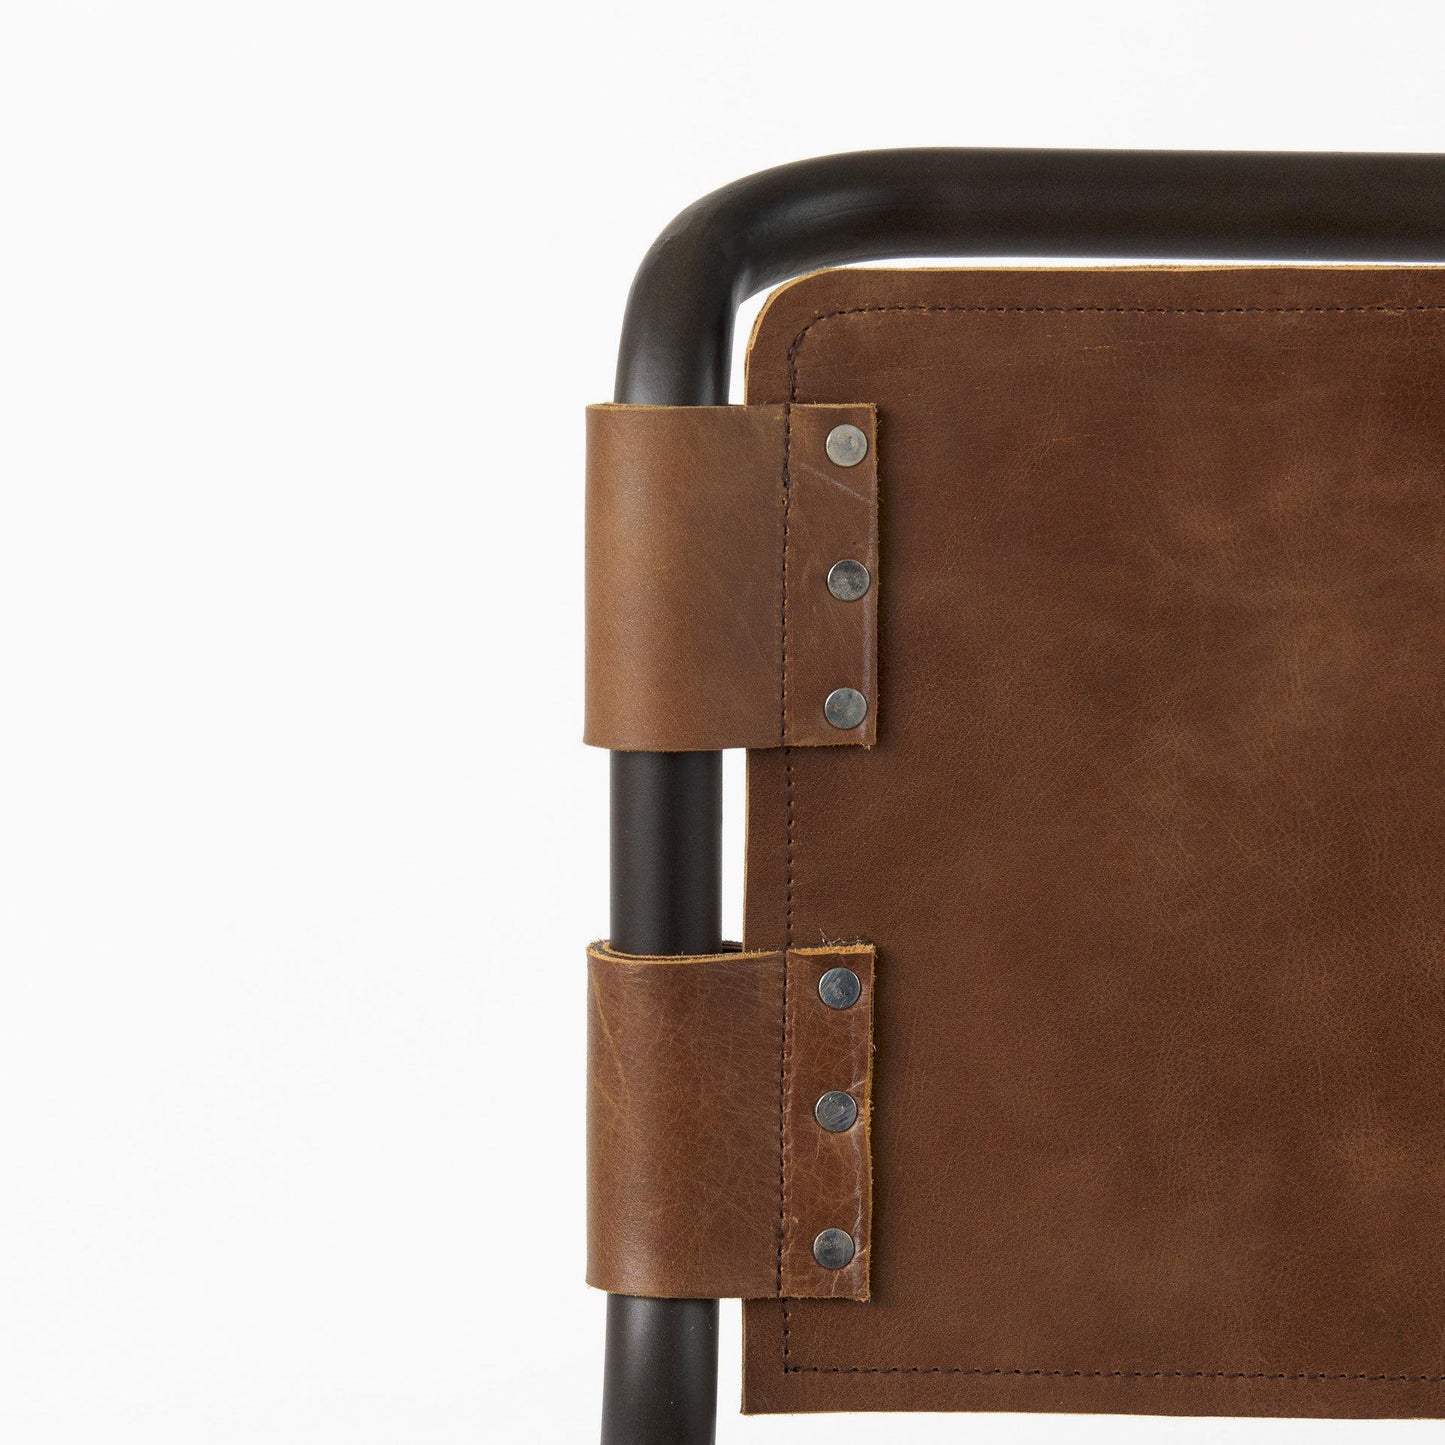 Berbick 20.5 x 24.75 x 39 Medium Brown Leather W/ Iron Frame Counter Stool